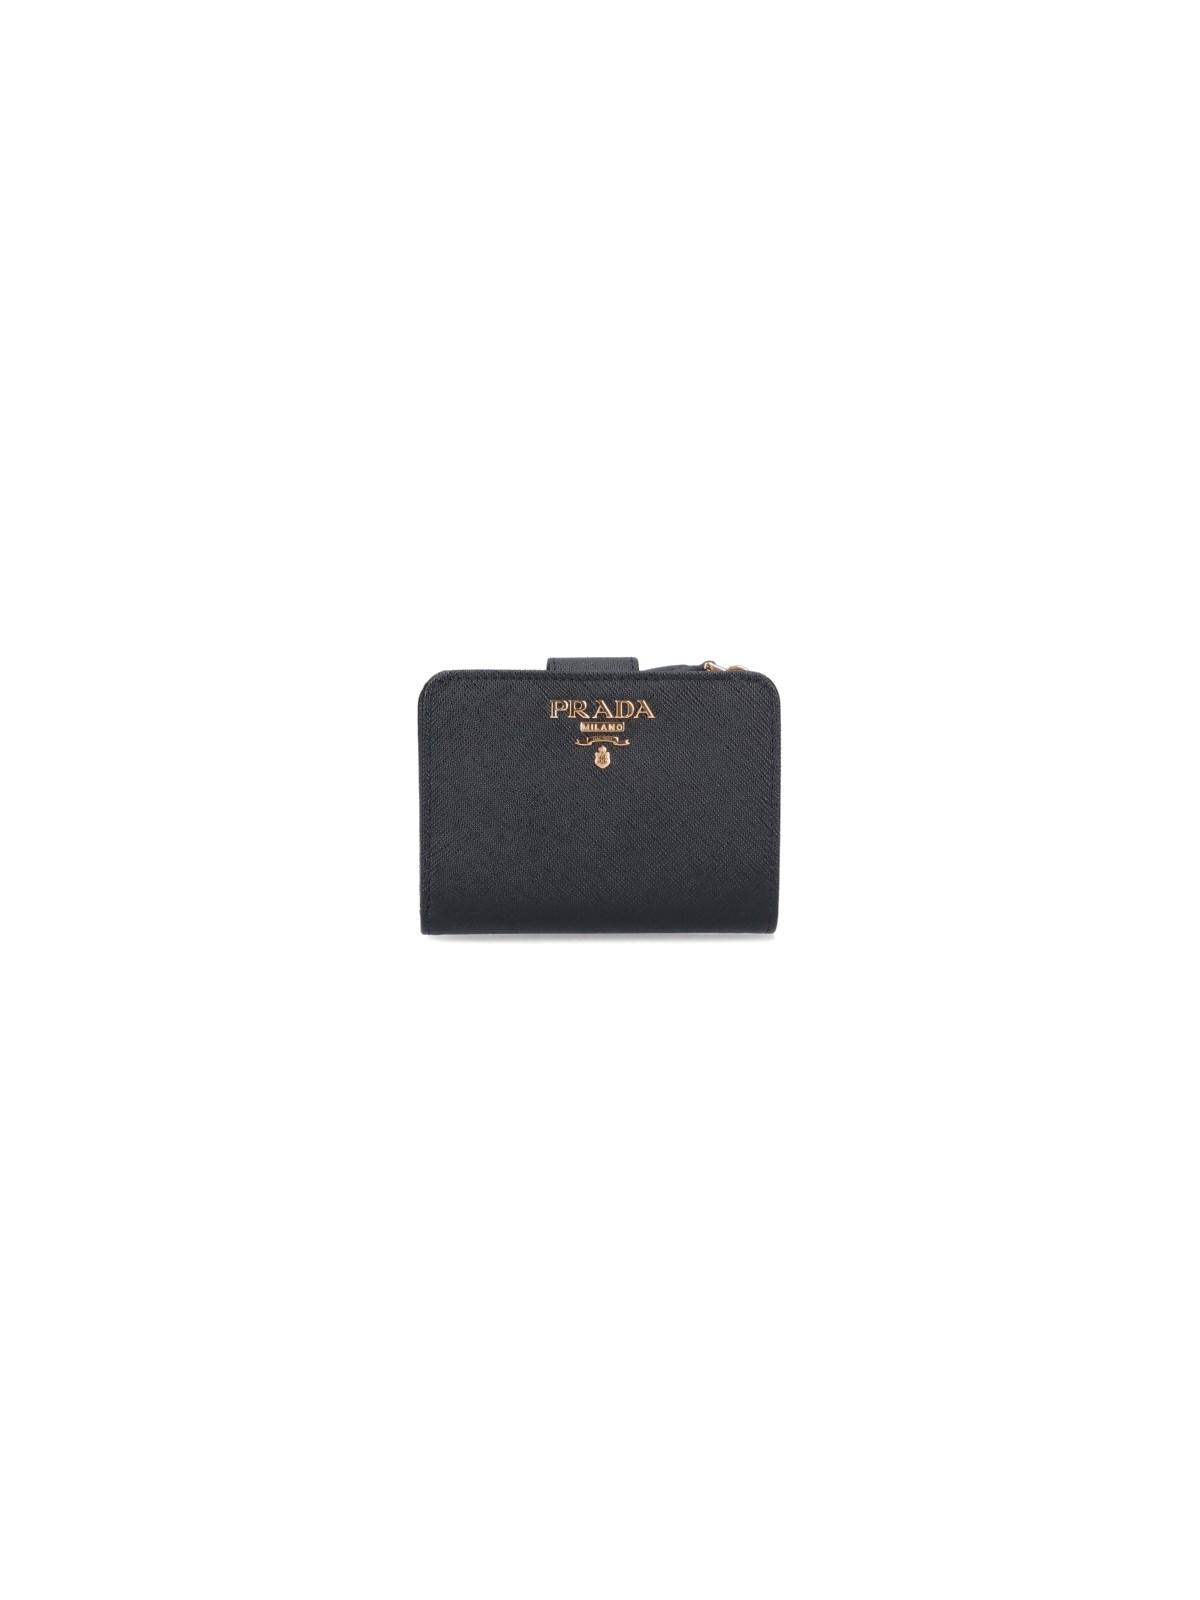 Prada Small Logo Wallet in Black | Lyst